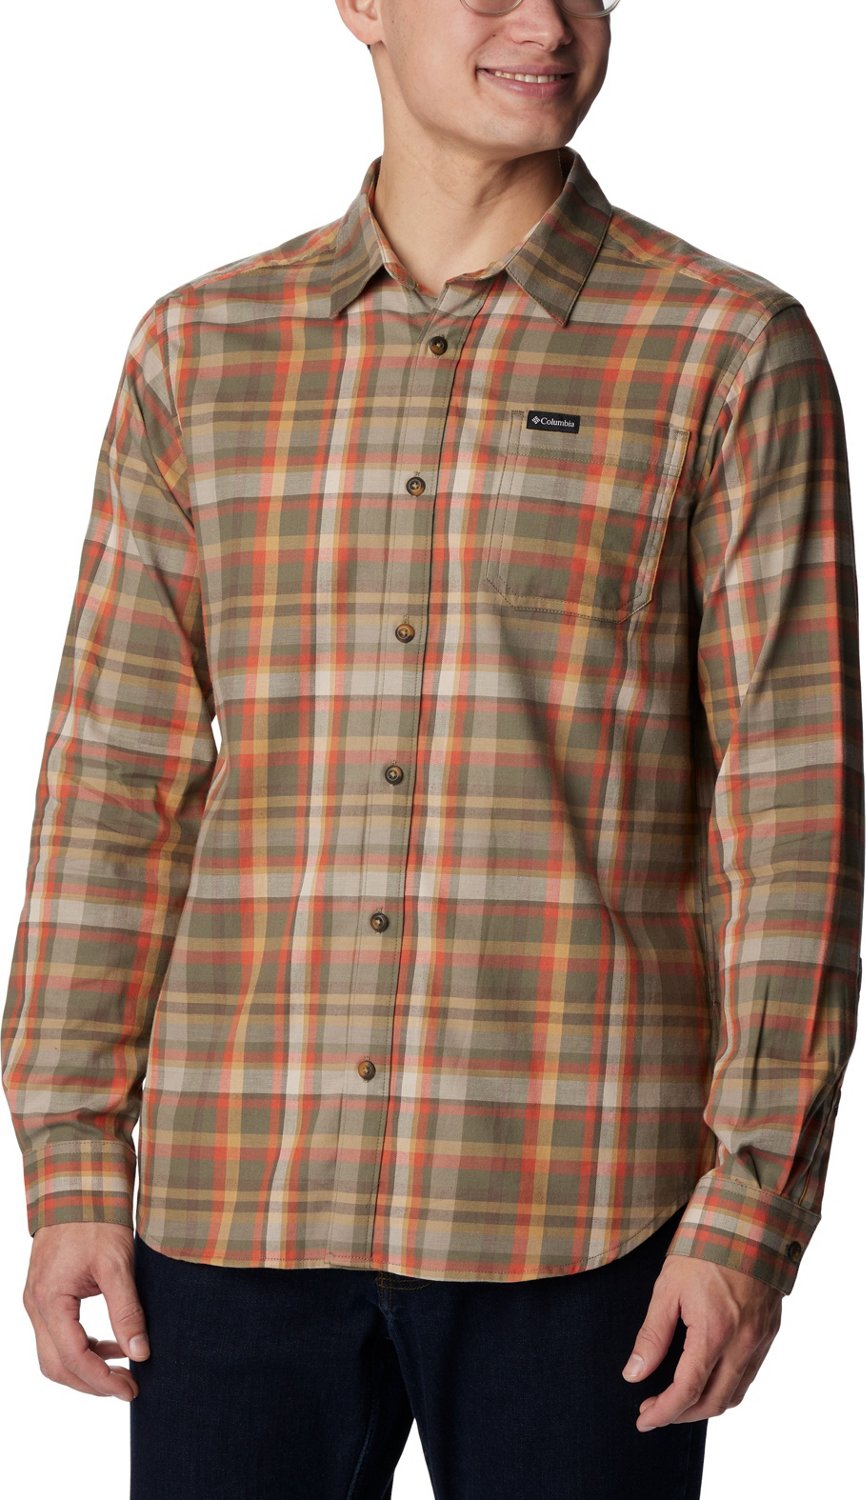 Academy Sports + Outdoors Columbia Sportswear Men's Vapor Ridge III Long  Sleeve Shirt